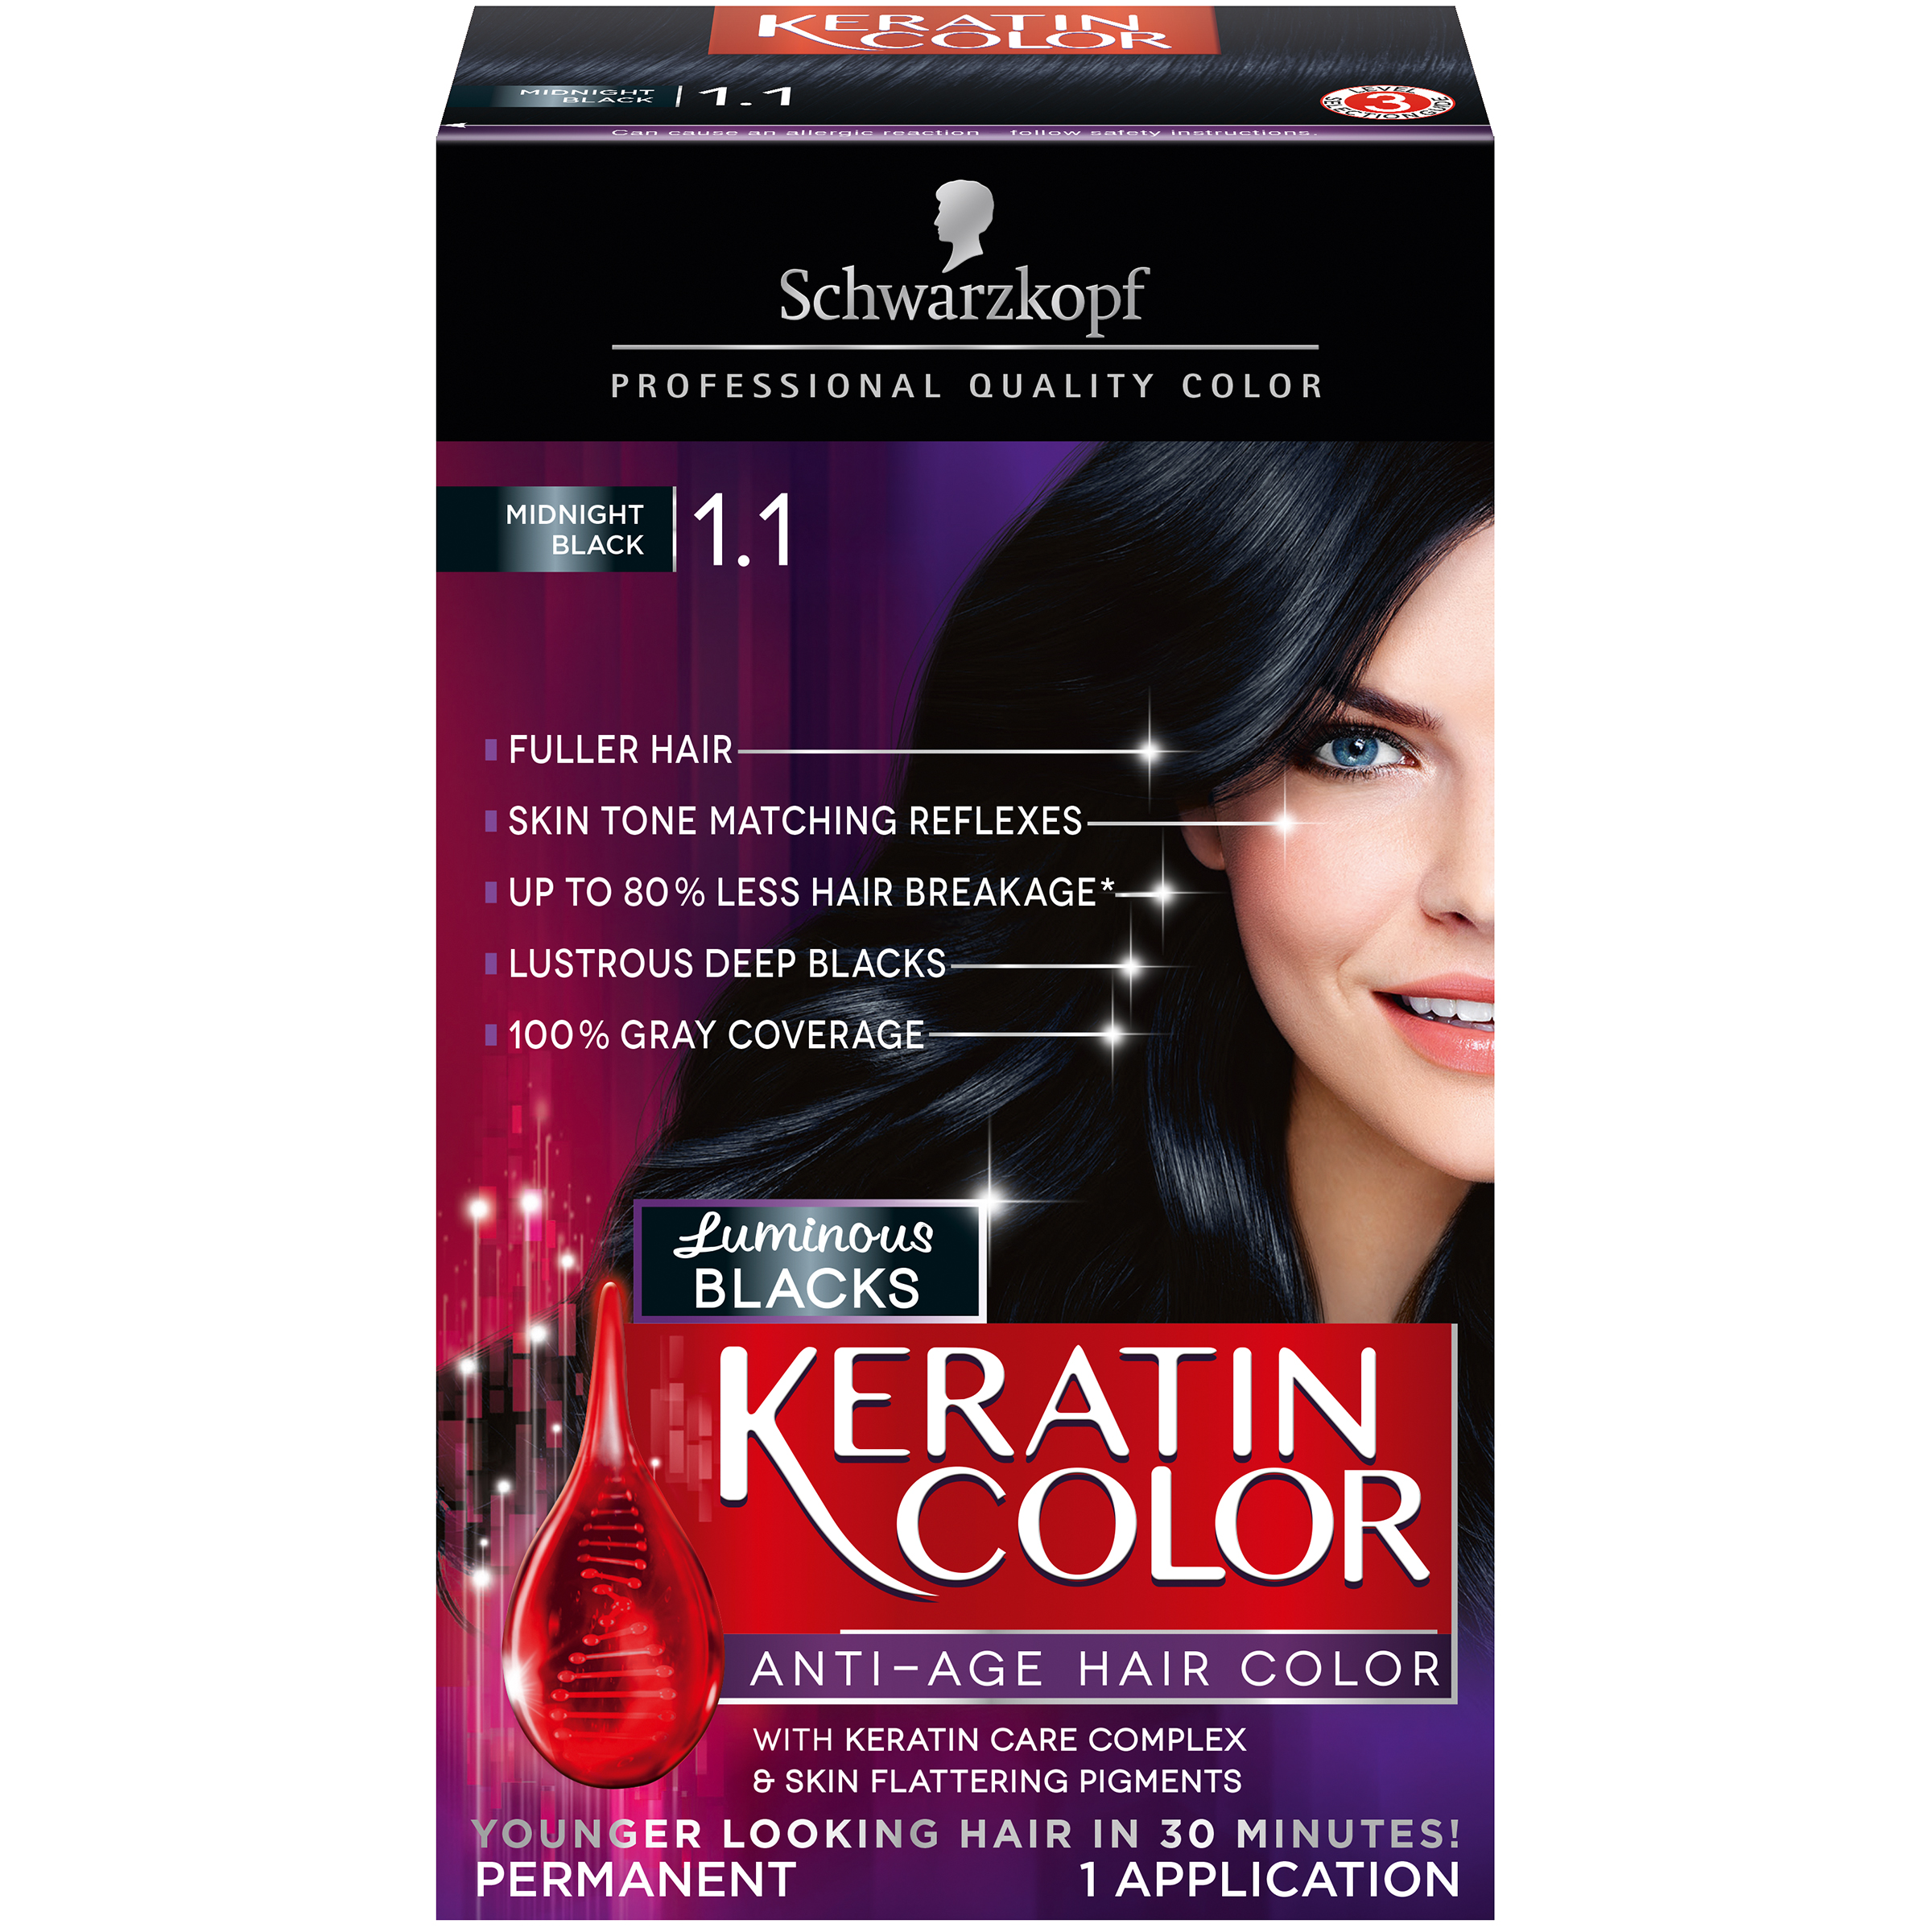 Schwarzkopf Keratin Color Anti-Age Hair Color Box